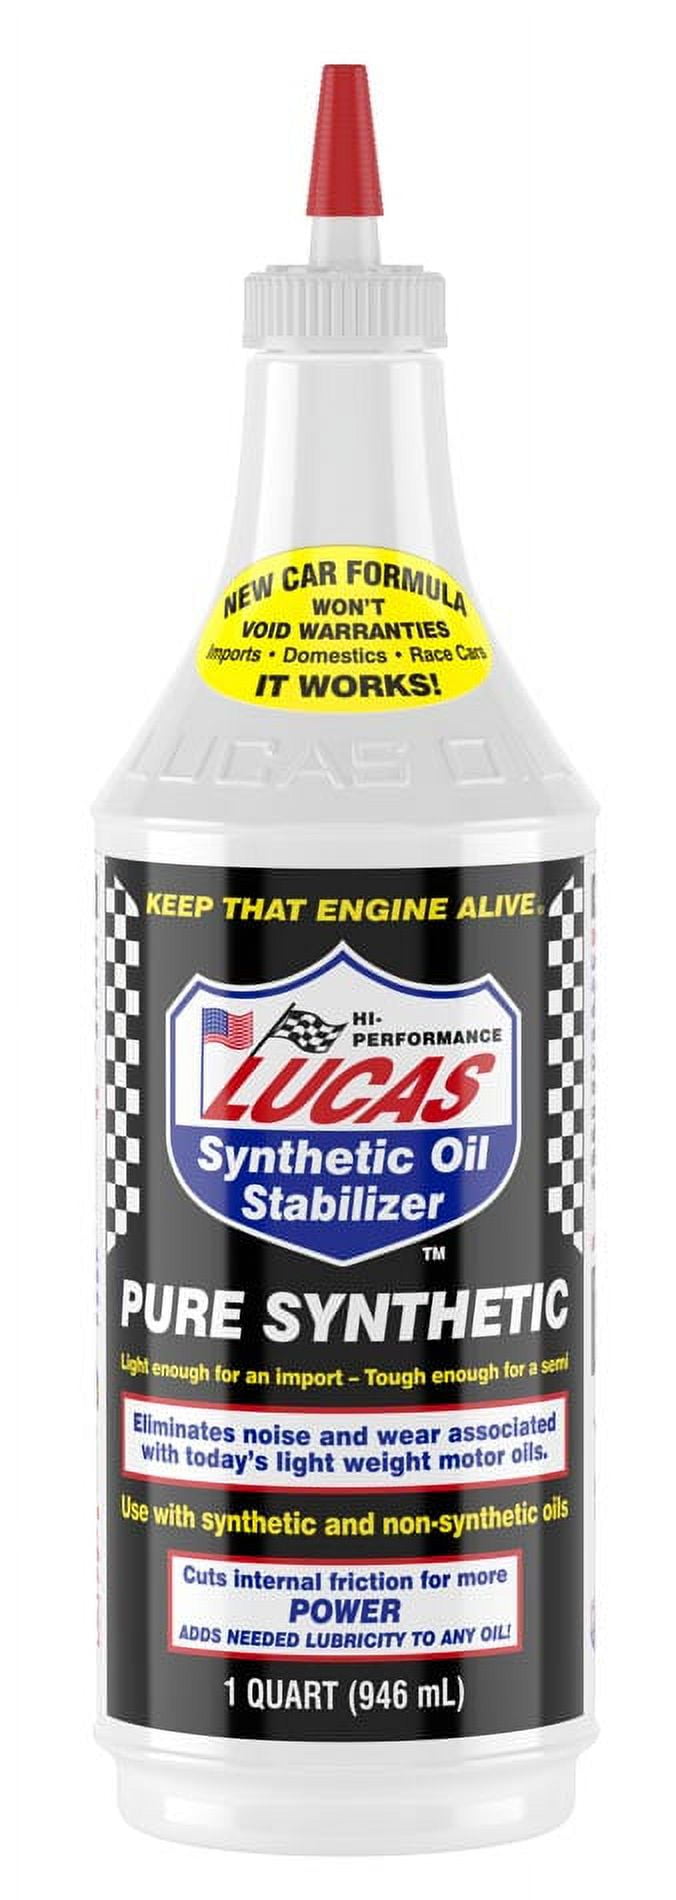 Lucas Synthetic Oil Stabilizer - 32 fl oz bottle